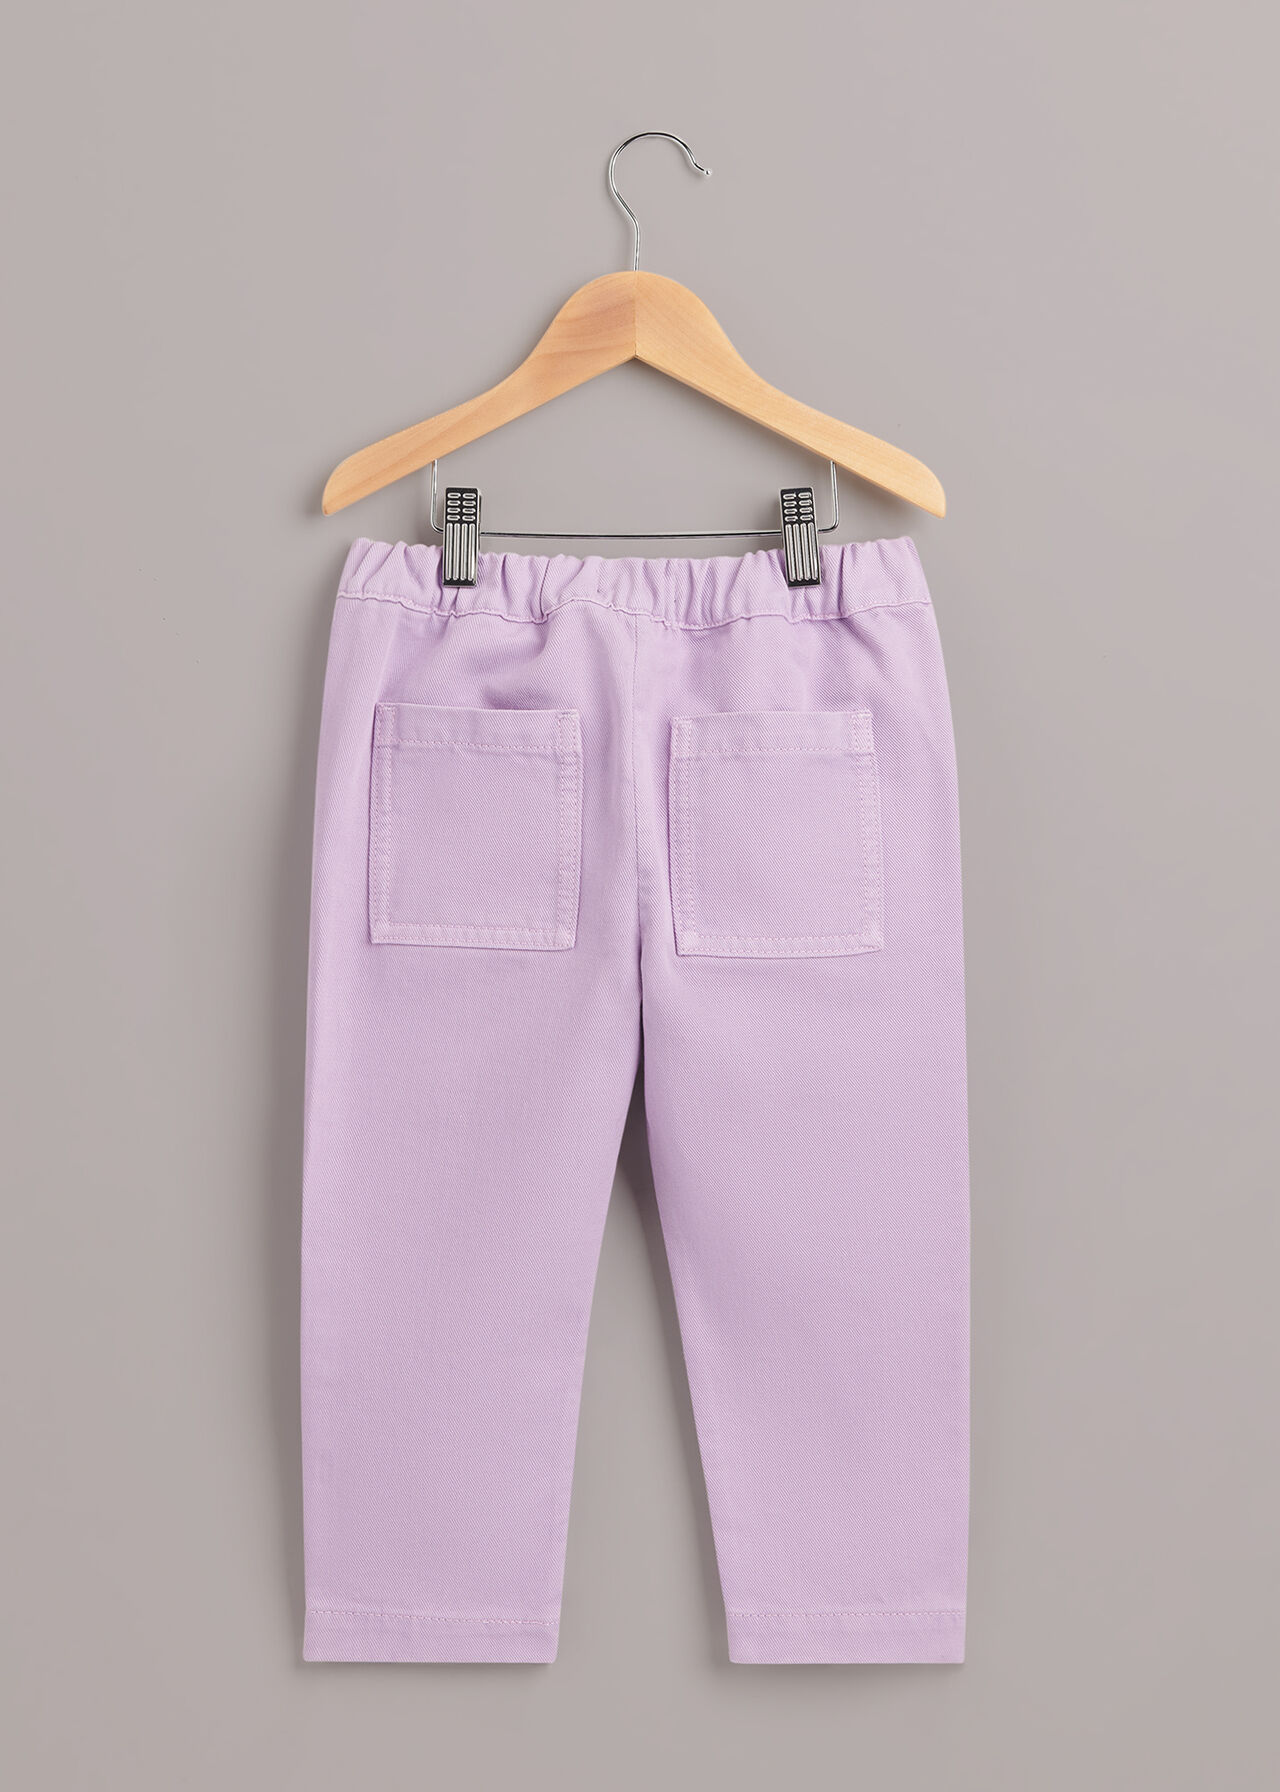 Flo Multi Stitched Trouser